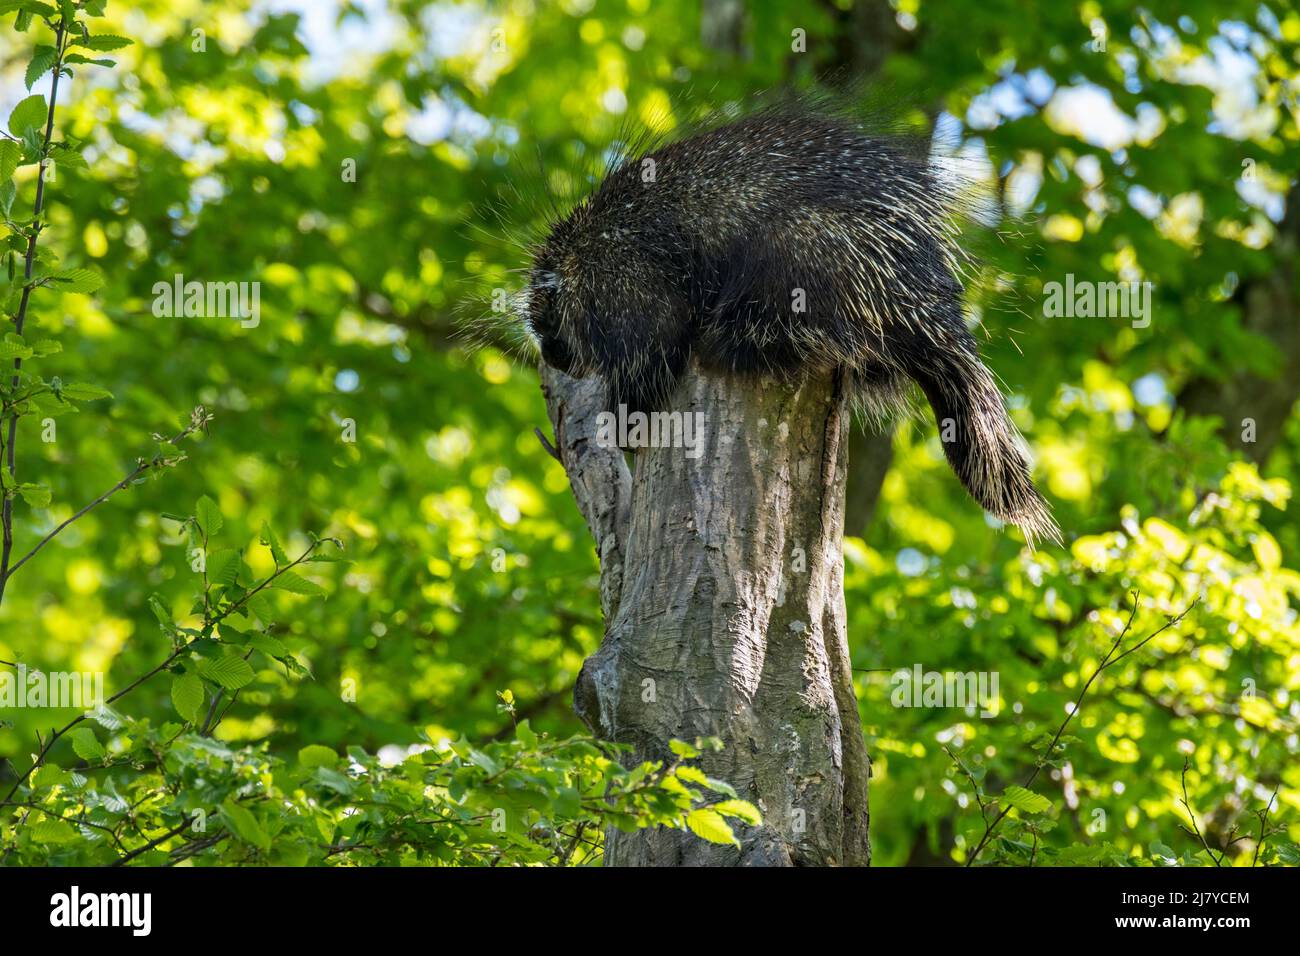 North American porcupine / Canadian porcupine (Erethizon dorsatum) sleeping in tree, native to North America Stock Photo